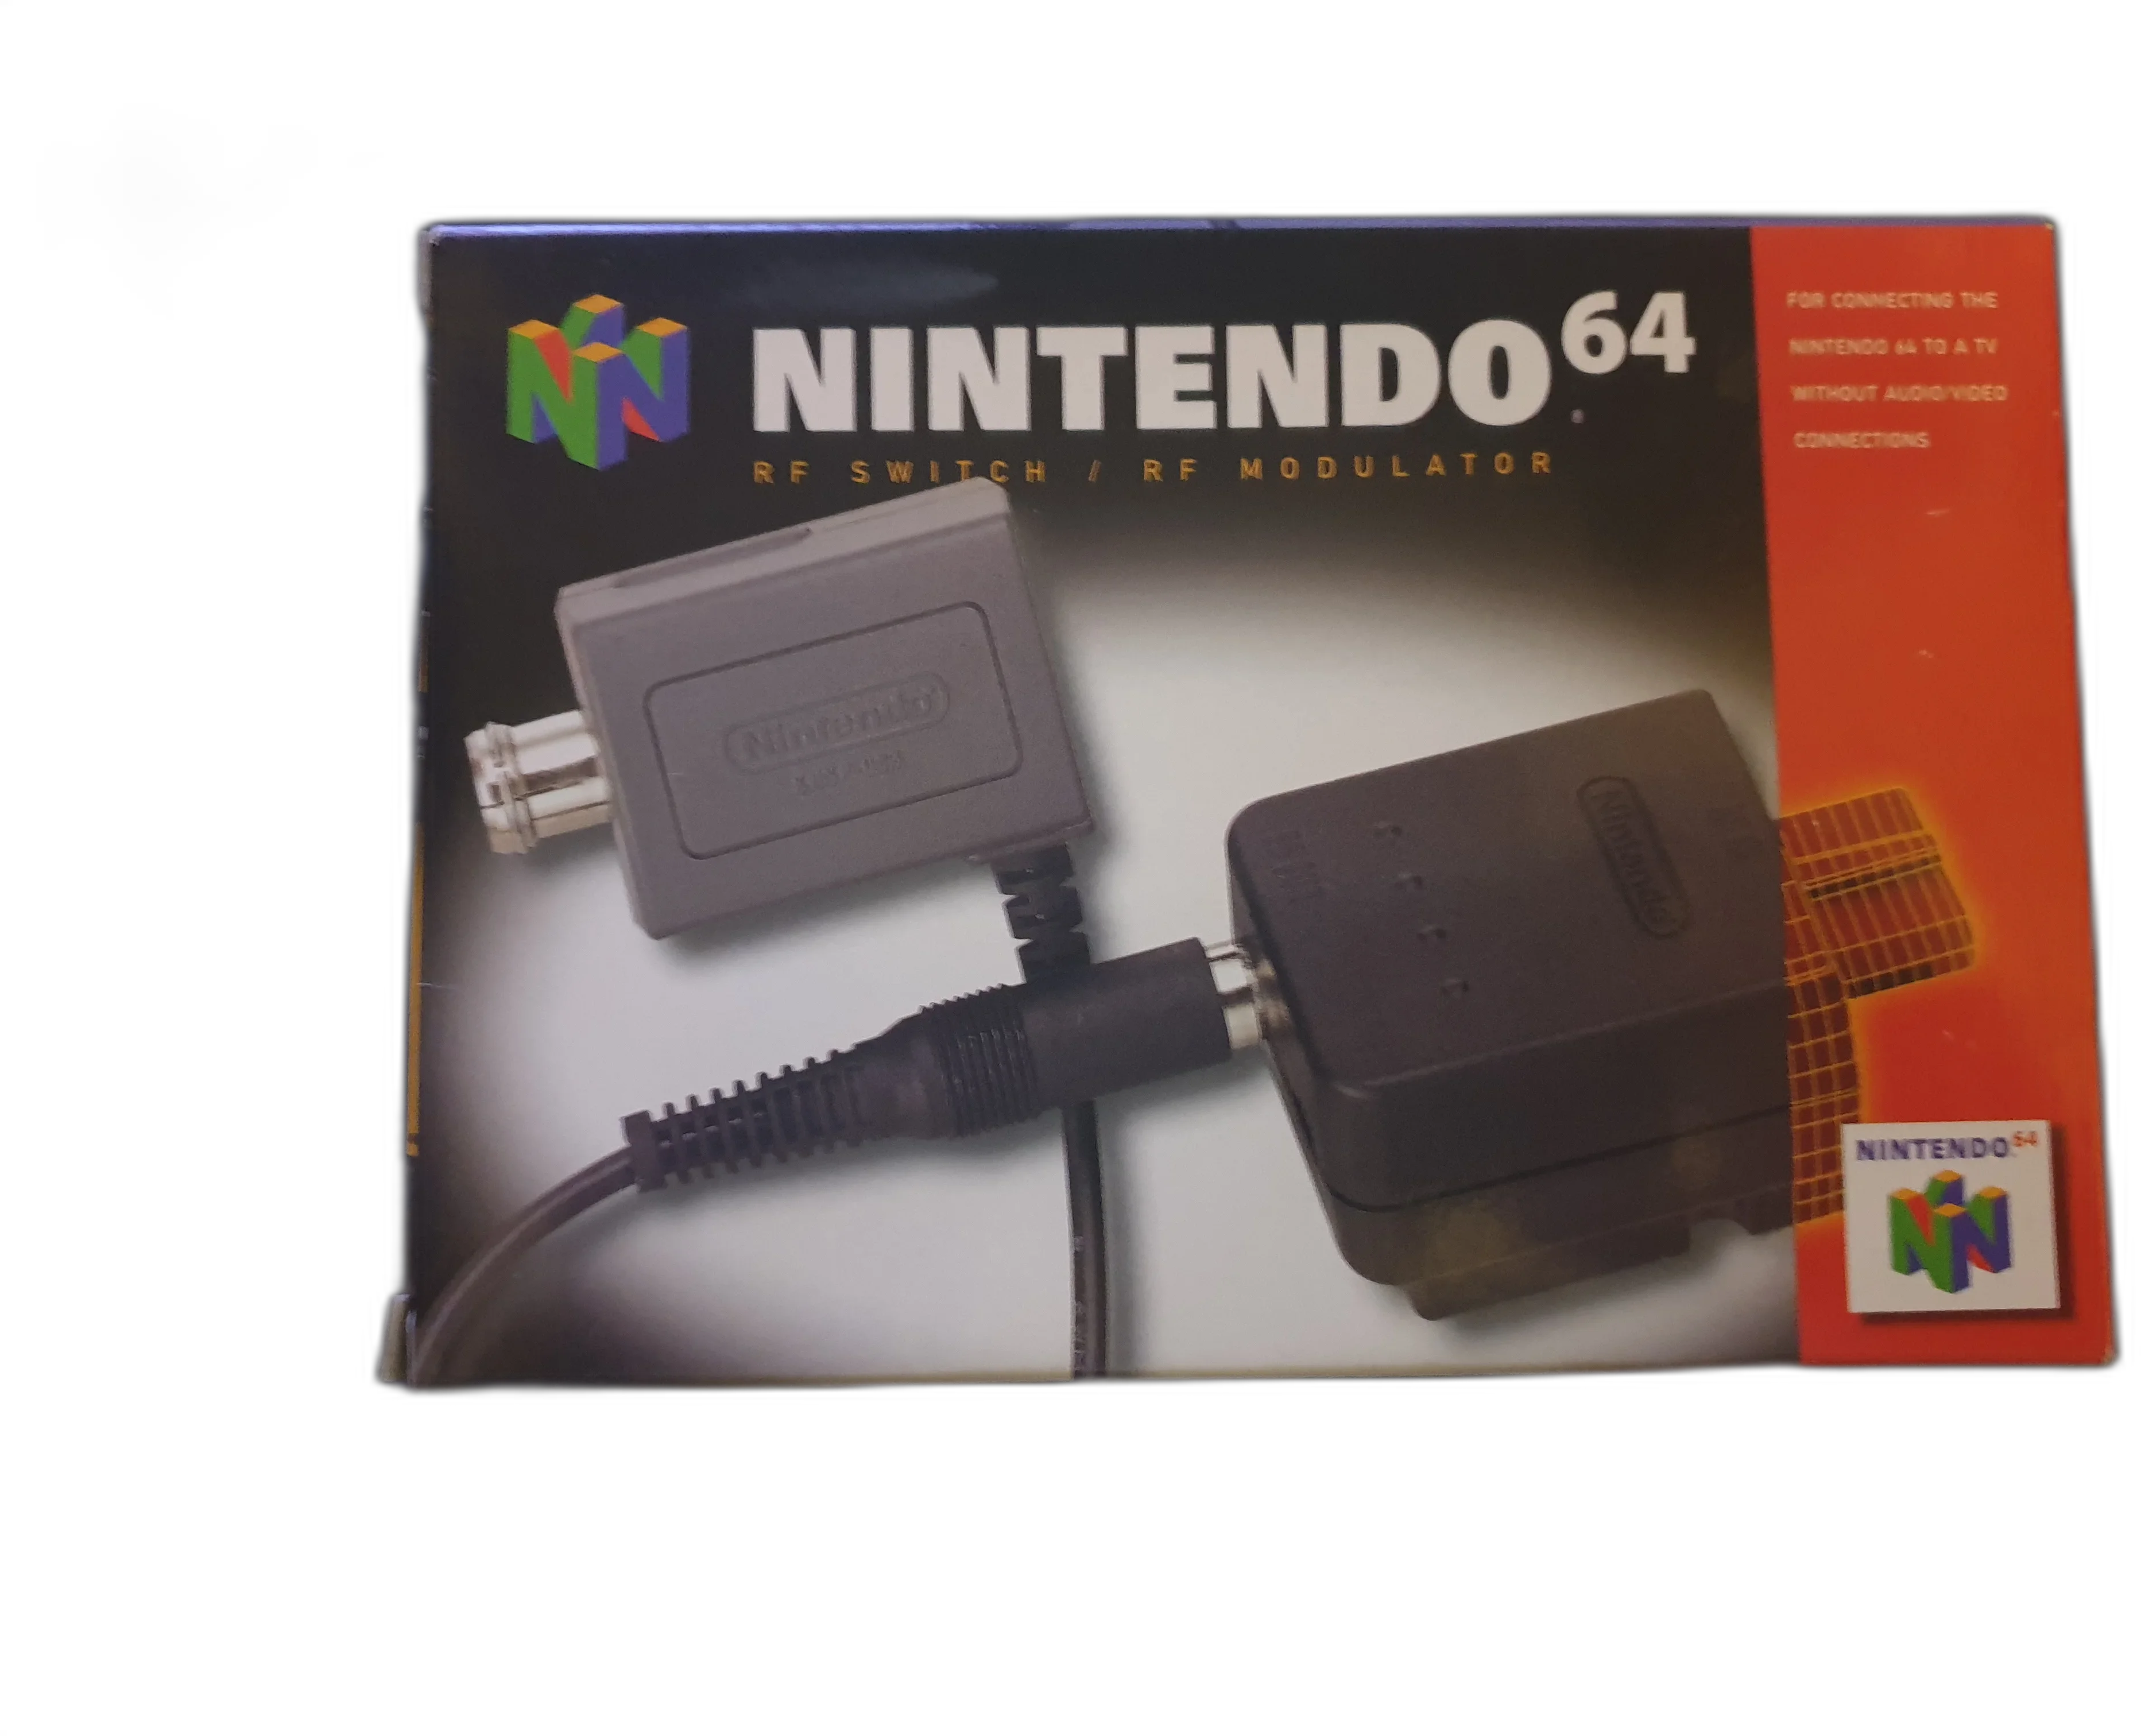  Nintendo 64 RF Switch / RF Modulator [AUS]